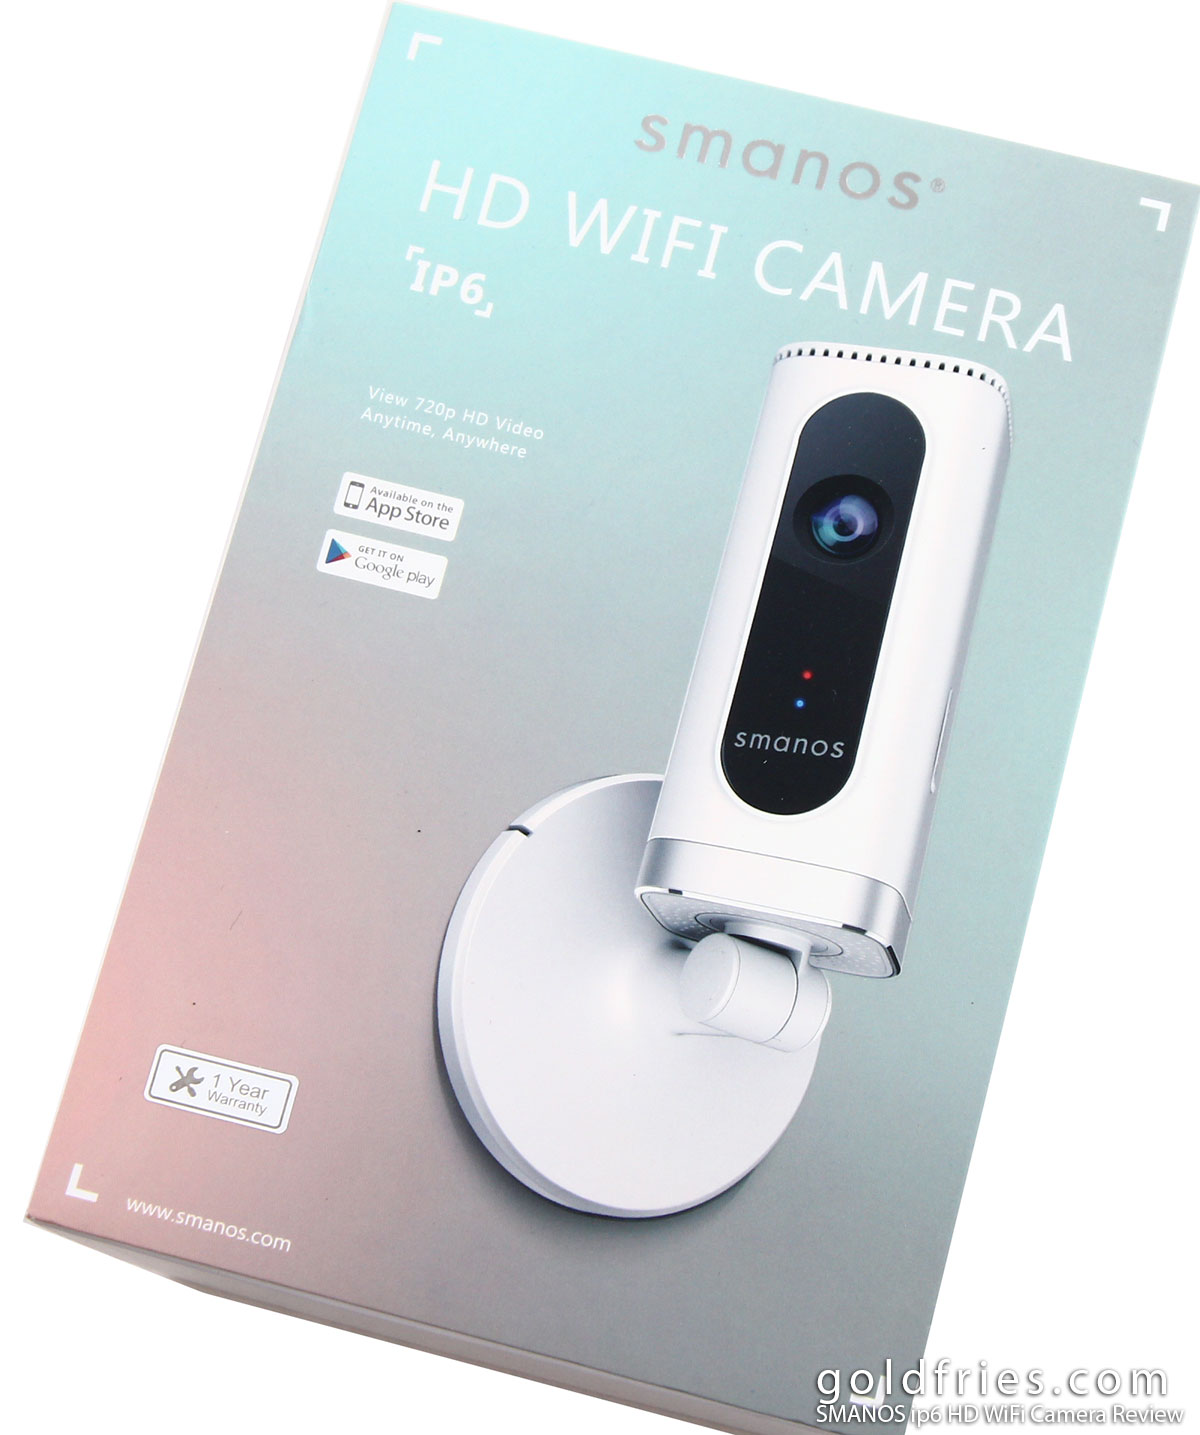 SMANOS ip6 HD WiFi Camera Review